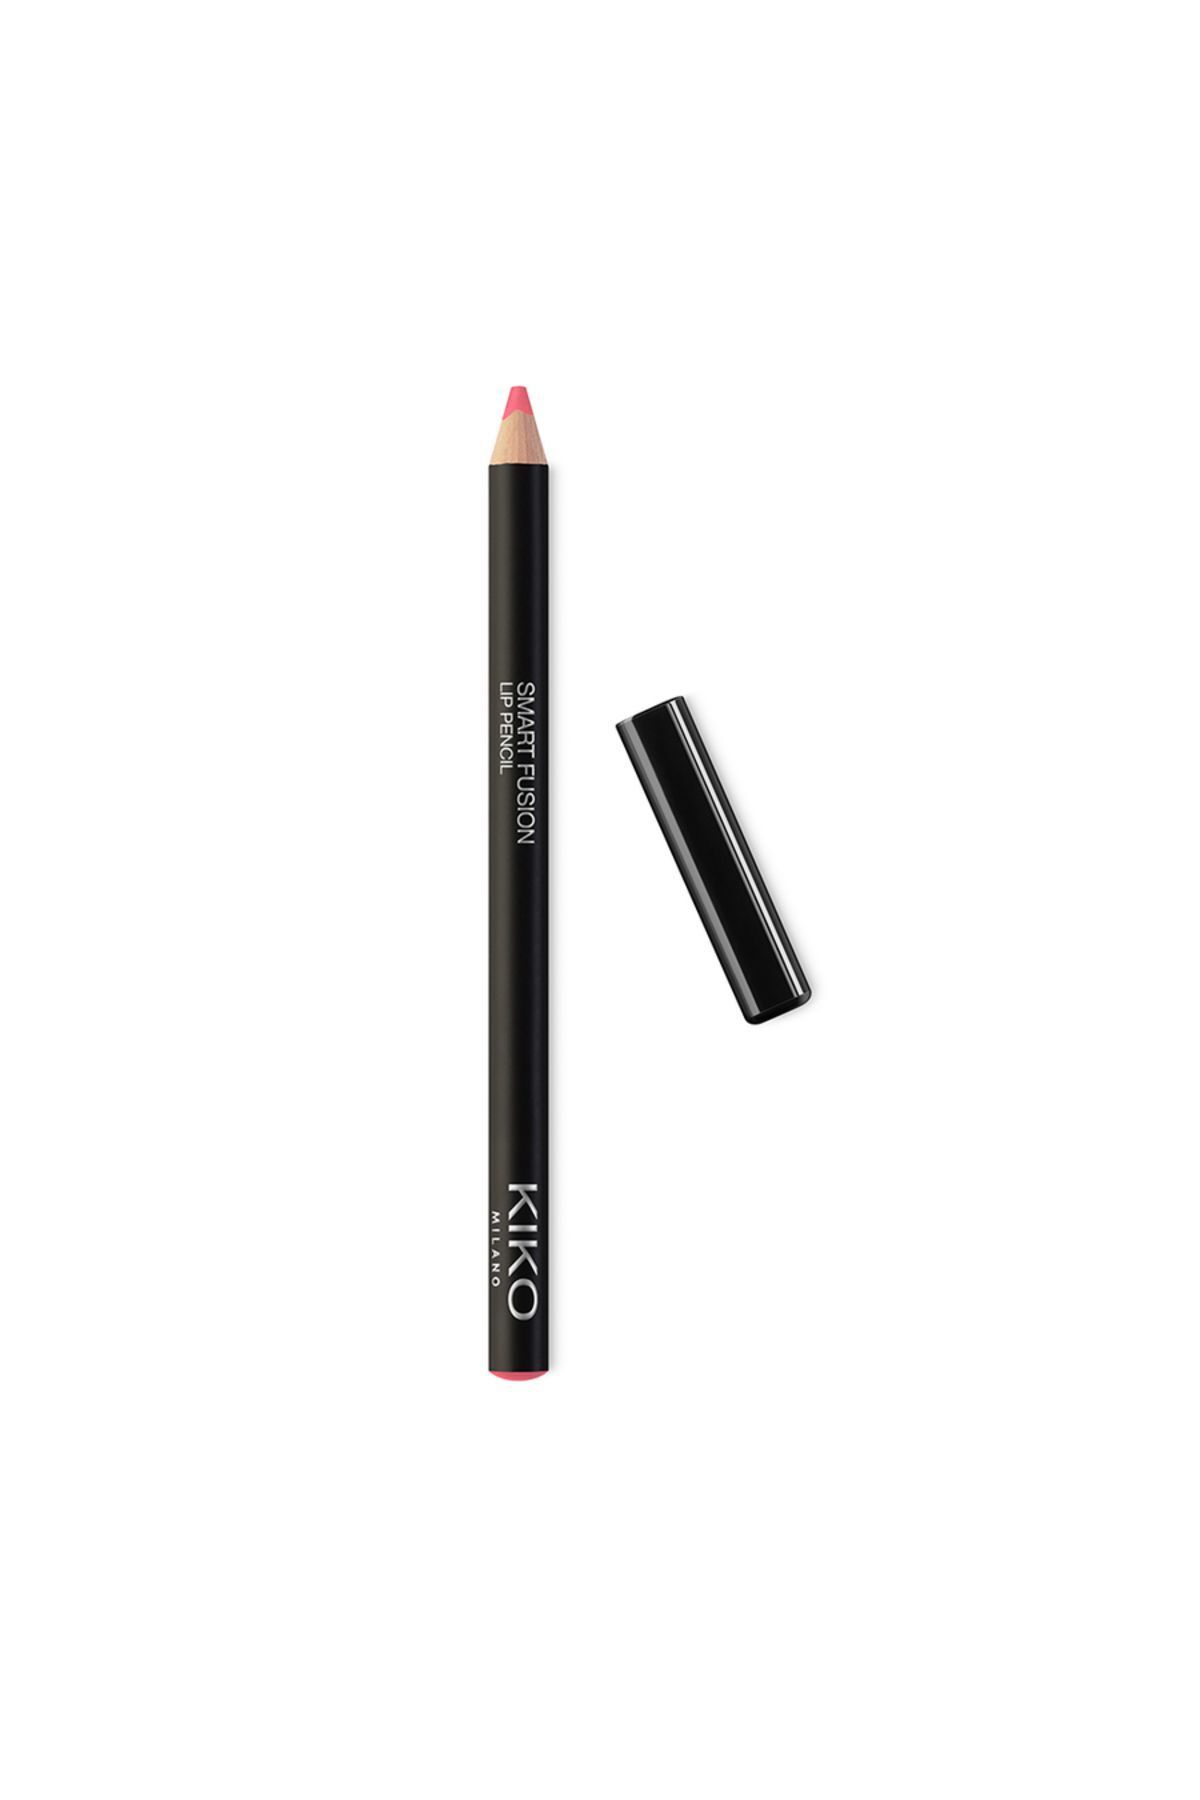 KIKO DUDAK KALEMİ - Smart Fusion Lip Pencil - 508 Candy Rose